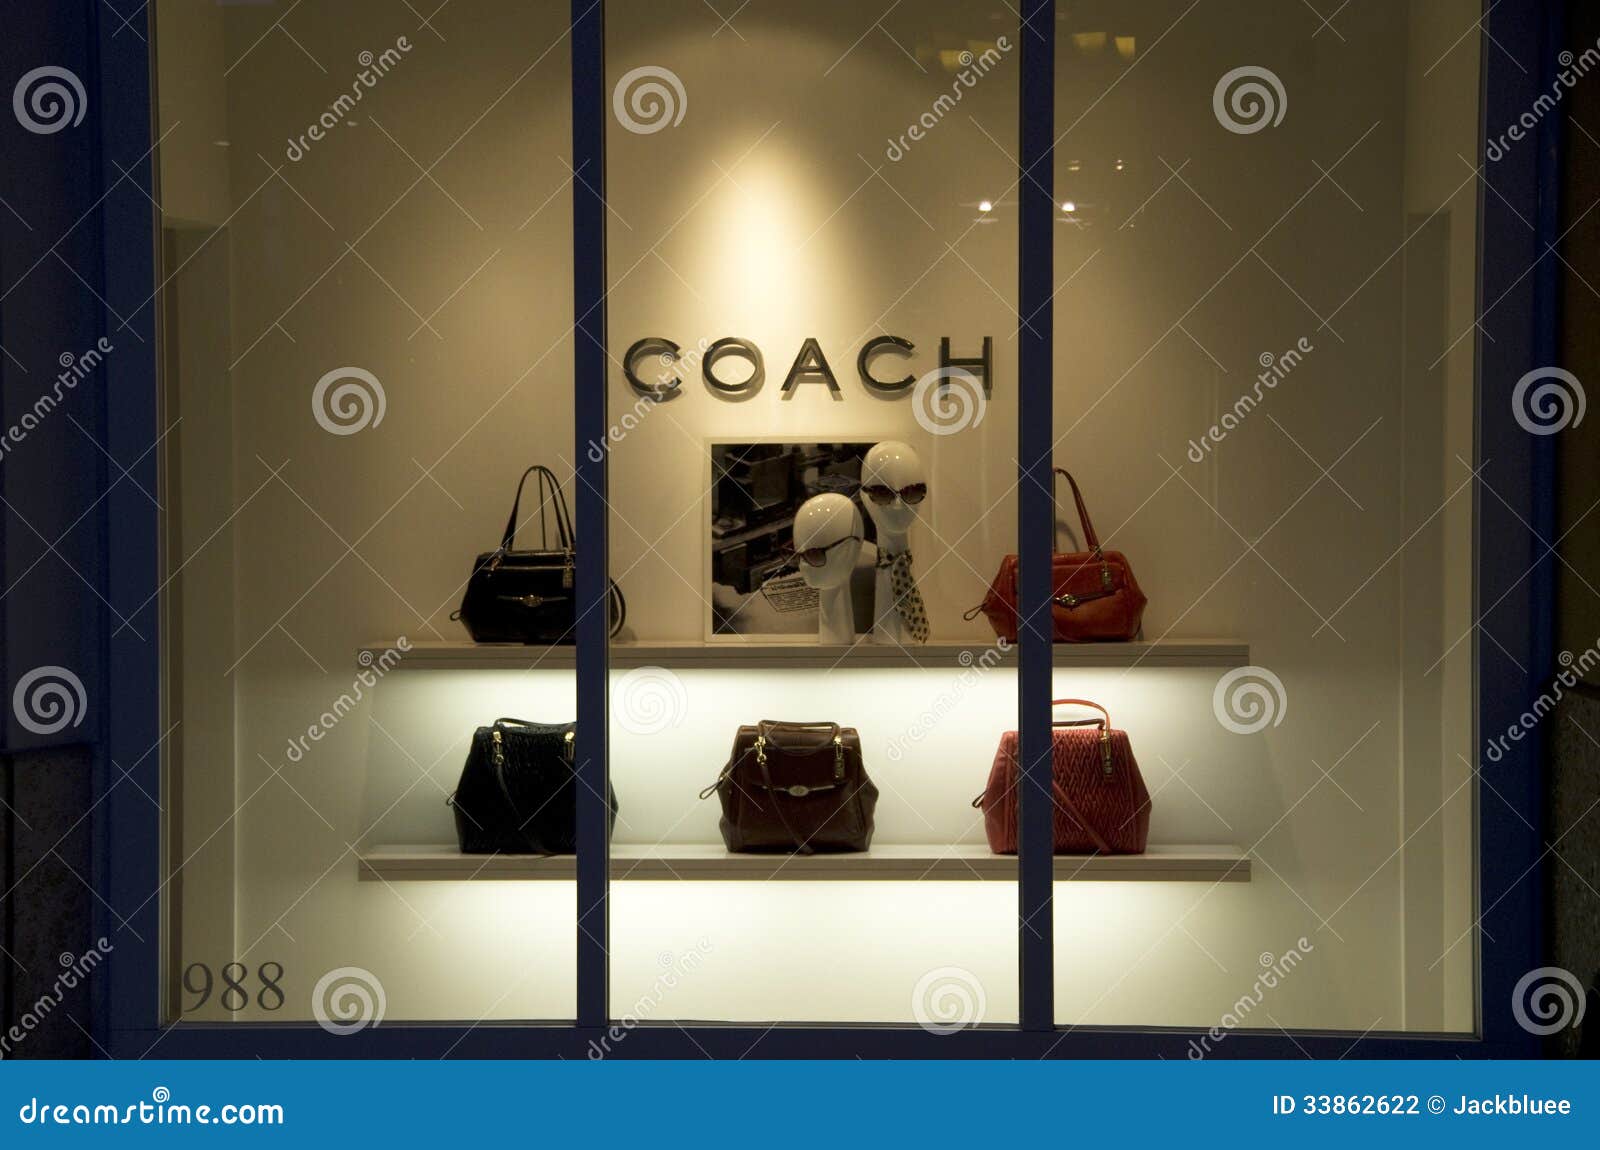 Editorial Photography: Coach handbag purse store